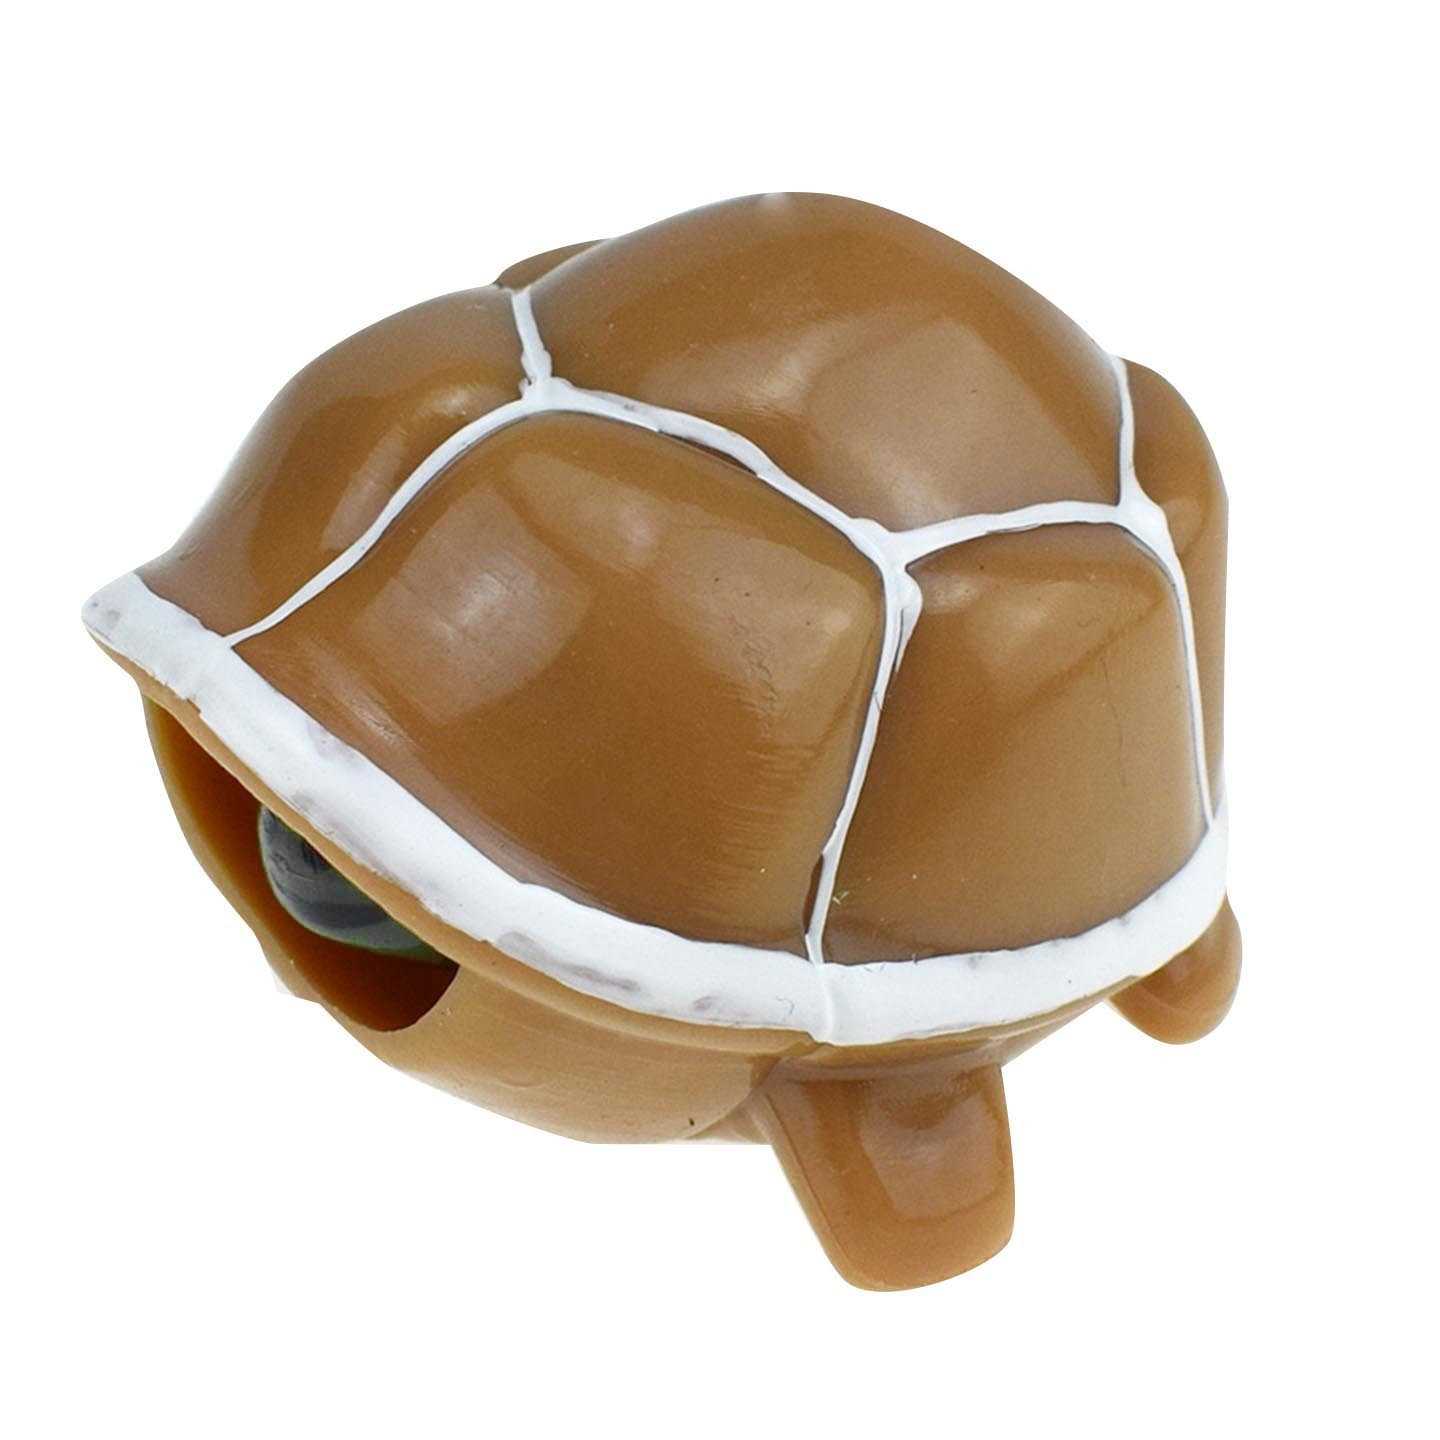 Turtle Vent Ball Hand Pinch antystresowy Relief dekompresja …